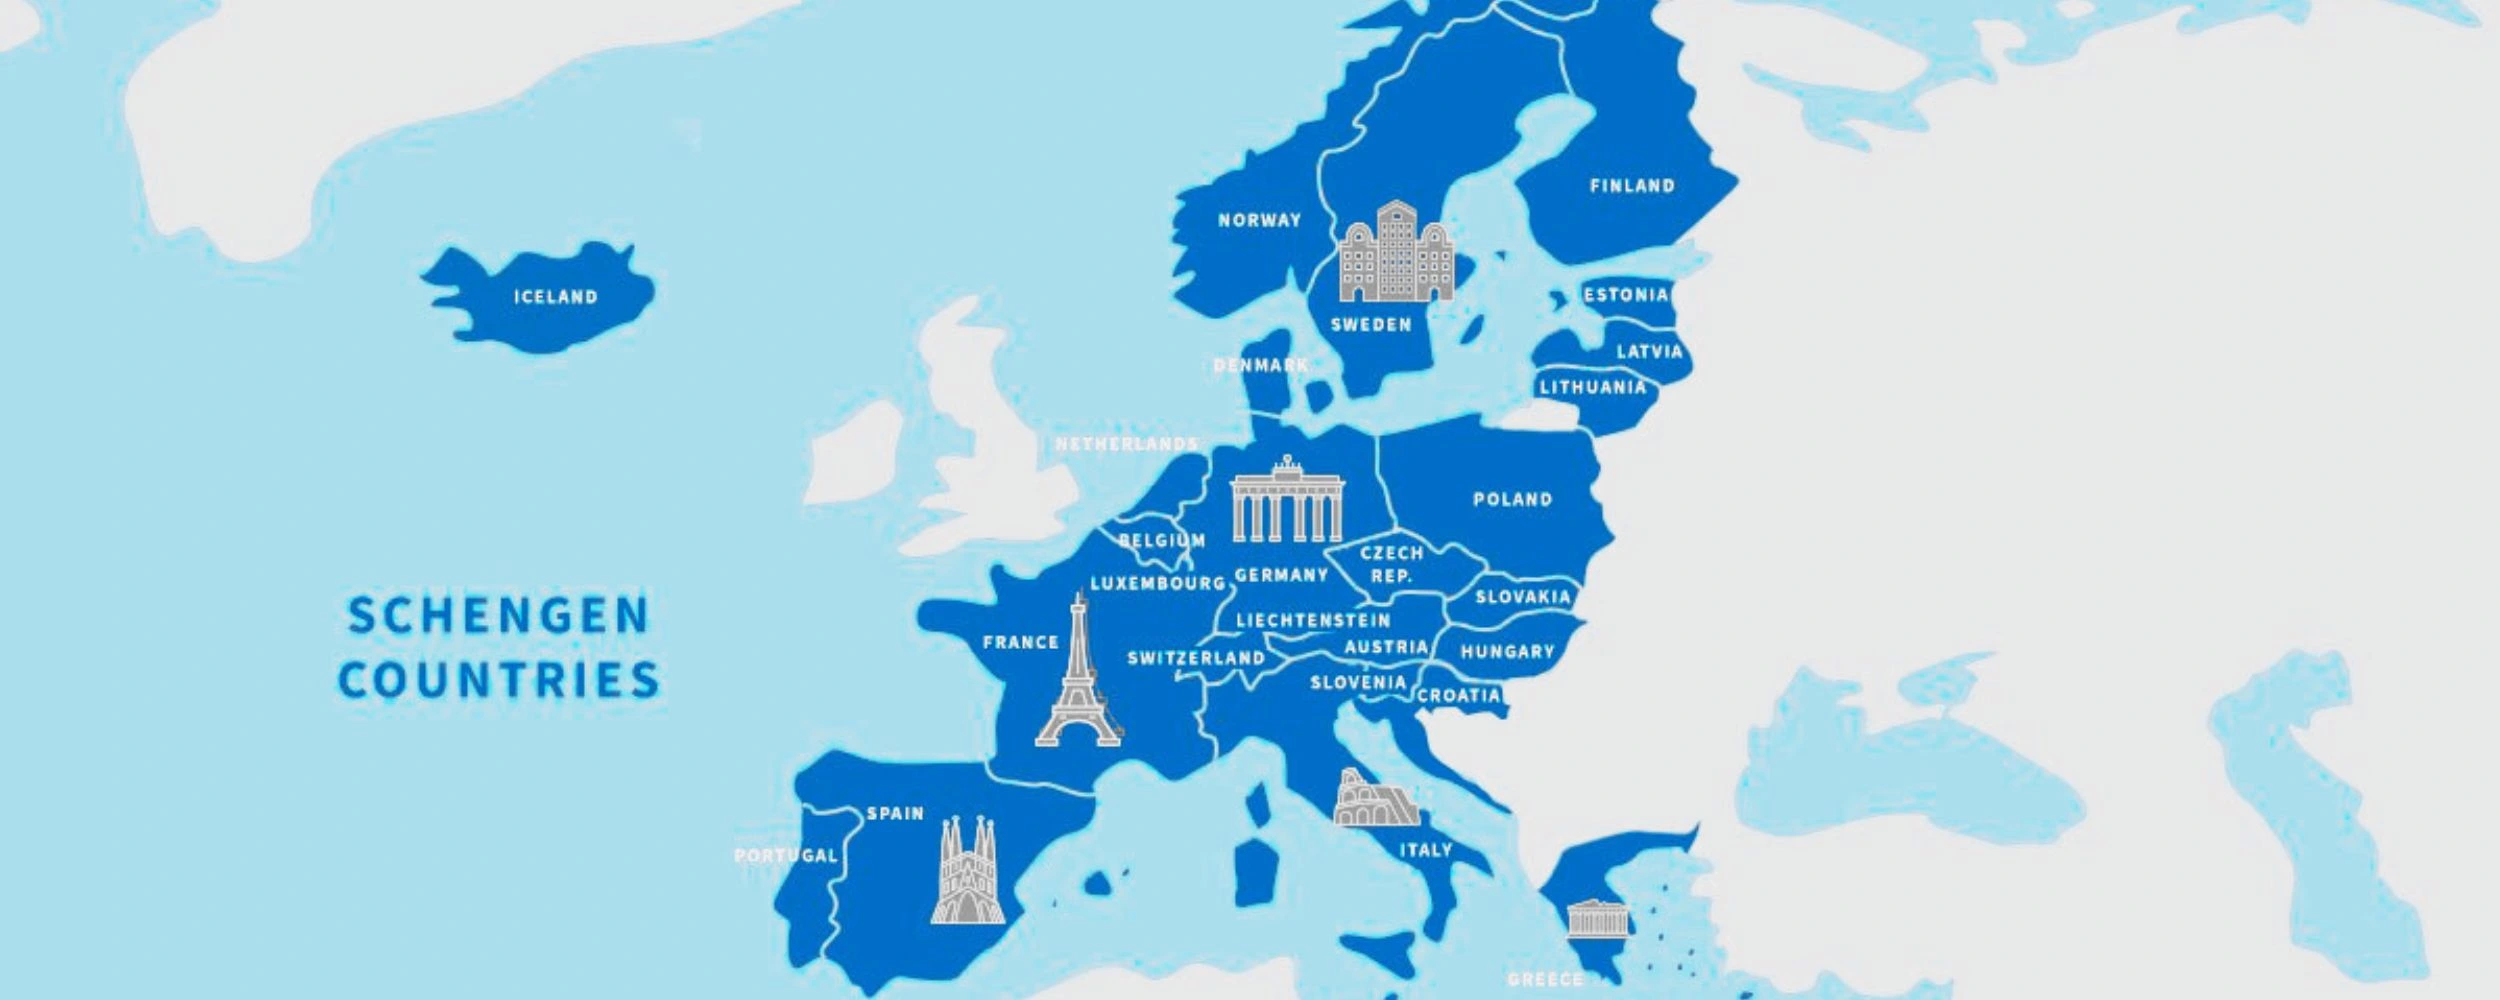 Countries in Schengen Area